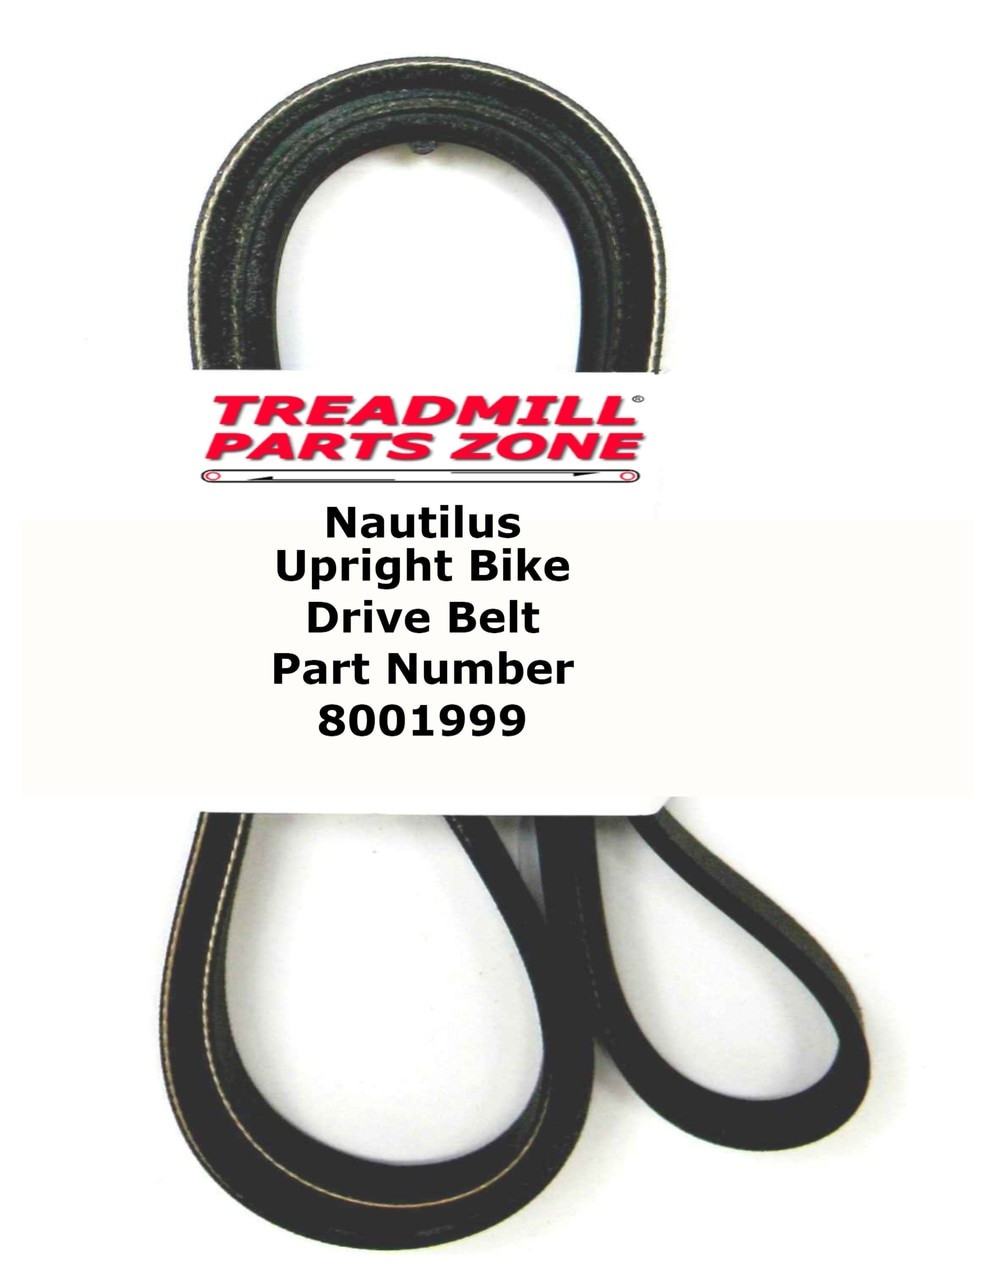 Nautilus Upright Bike Model U684 Drive Belt Part Number 8001999